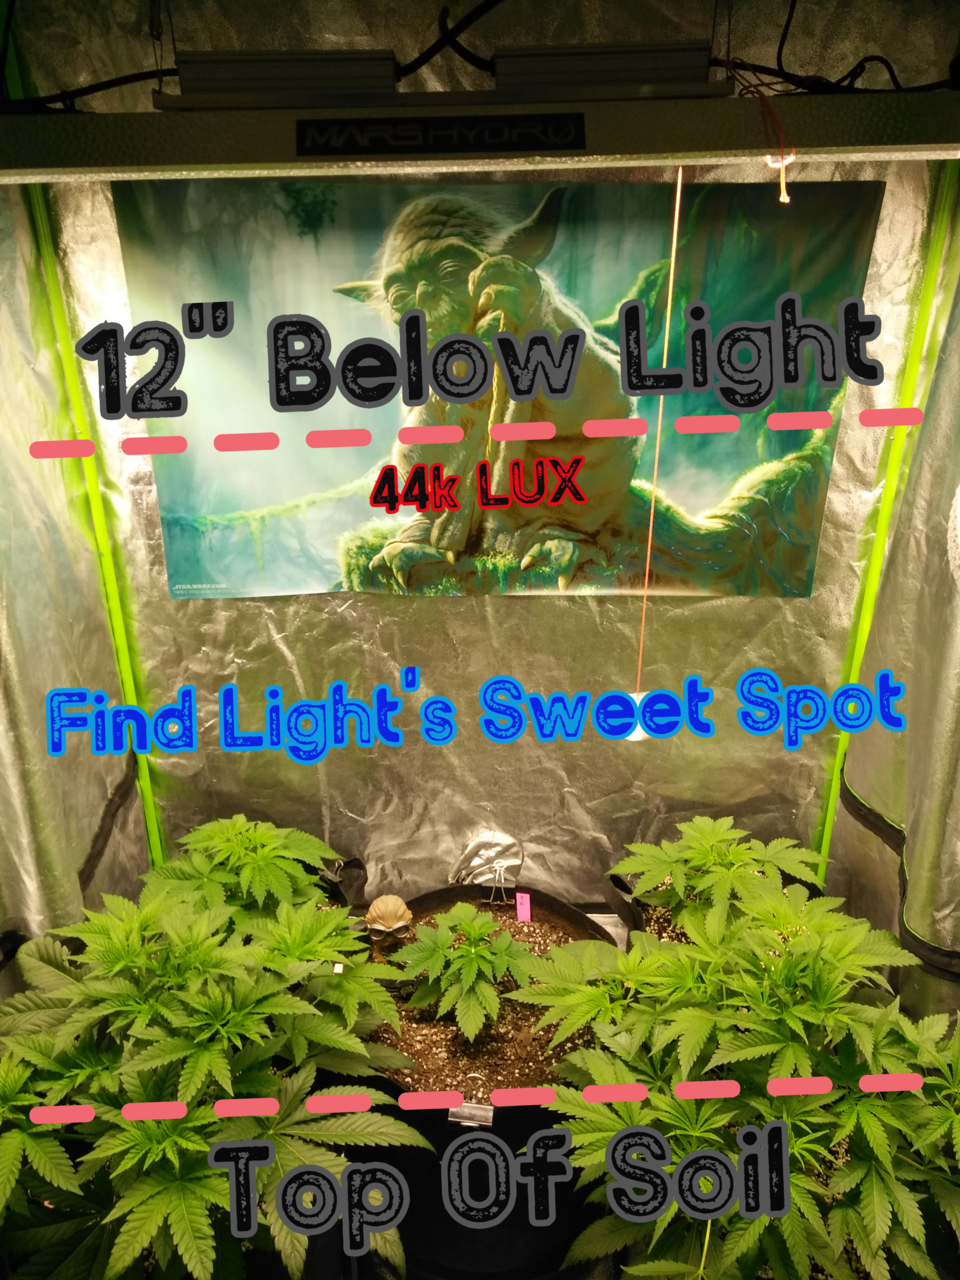 Step 2:  Find Light's Sweet Spot